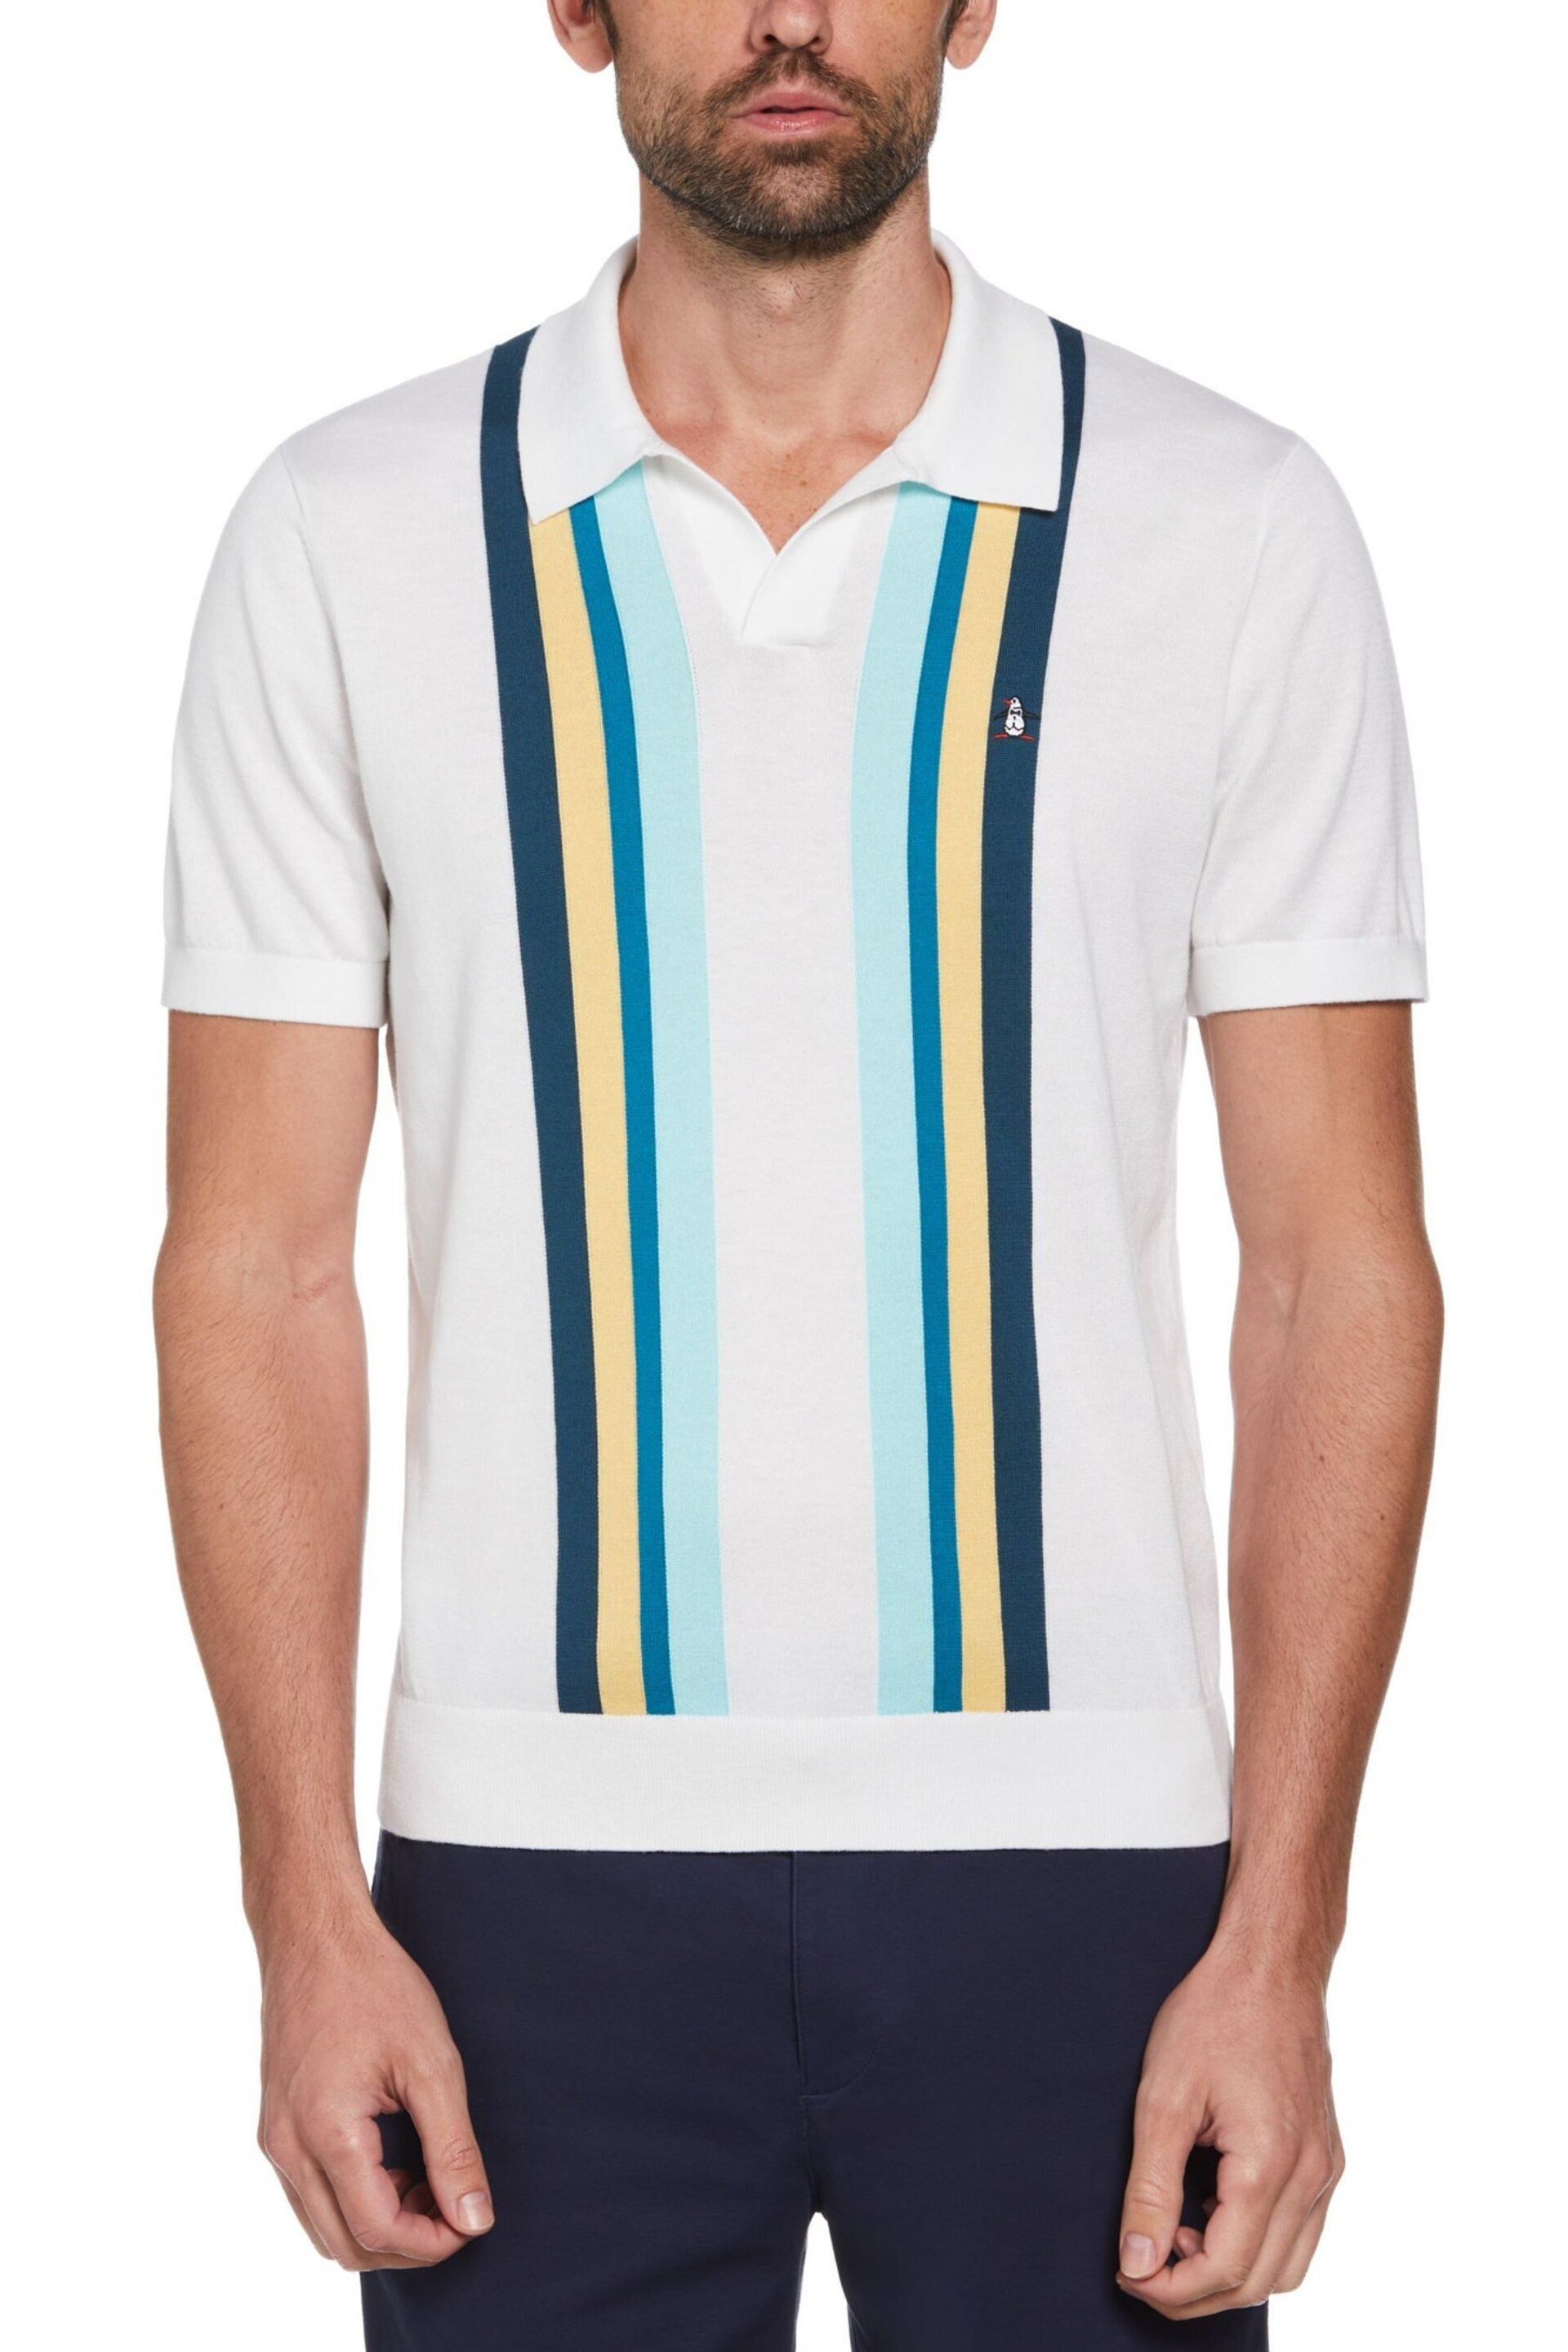 Original Penguin Textured Vertical Stripe Short Sleeve Polo Shirt - Image 1 of 2